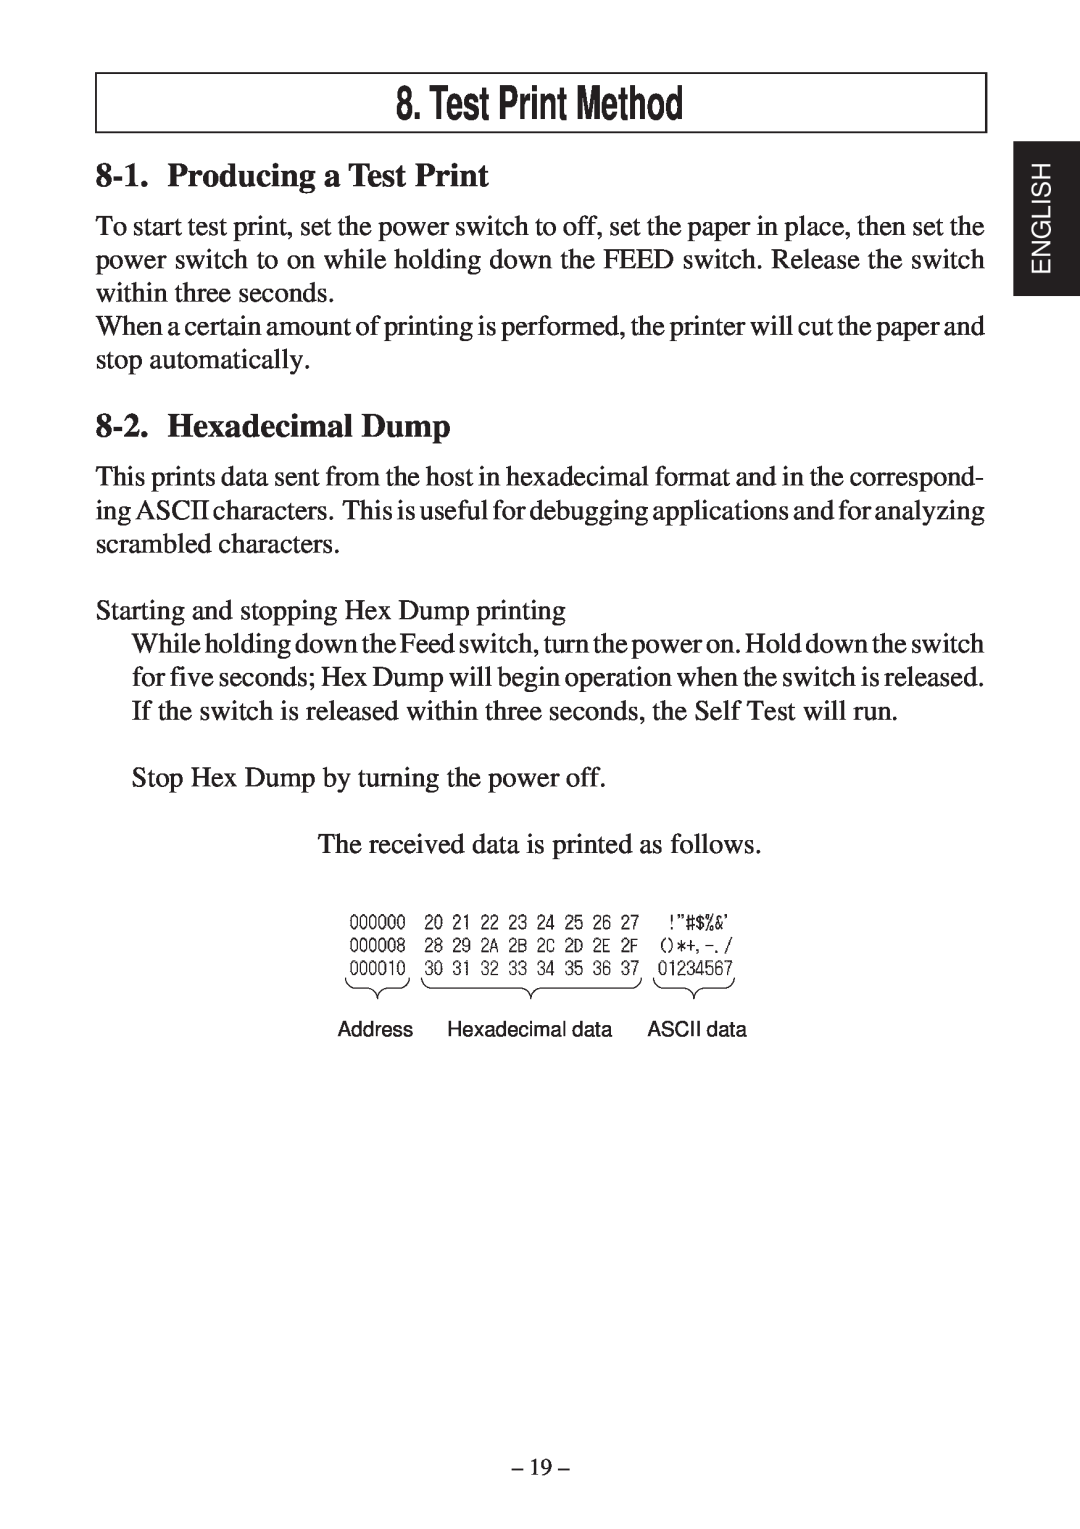 Star Micronics TSP2000 user manual Test Print Method, Producing a Test Print, Hexadecimal Dump 